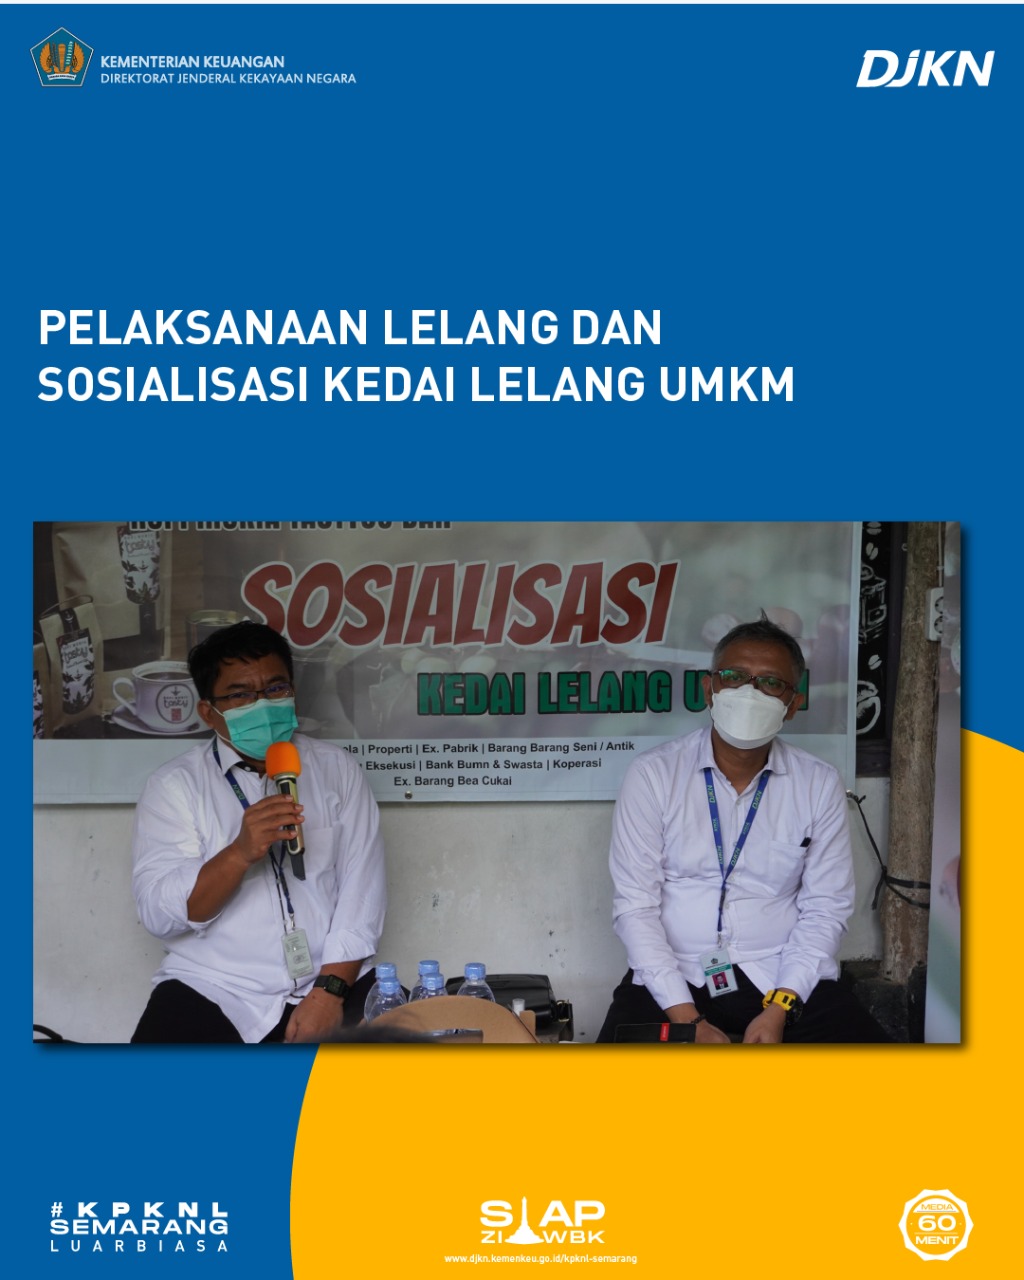 Sosialisasikan Kedai Lelang UMKM, KPKNL Semarang Undang Para Pelaku UMKM Di Wilayah Kudus dan Sekitarnya